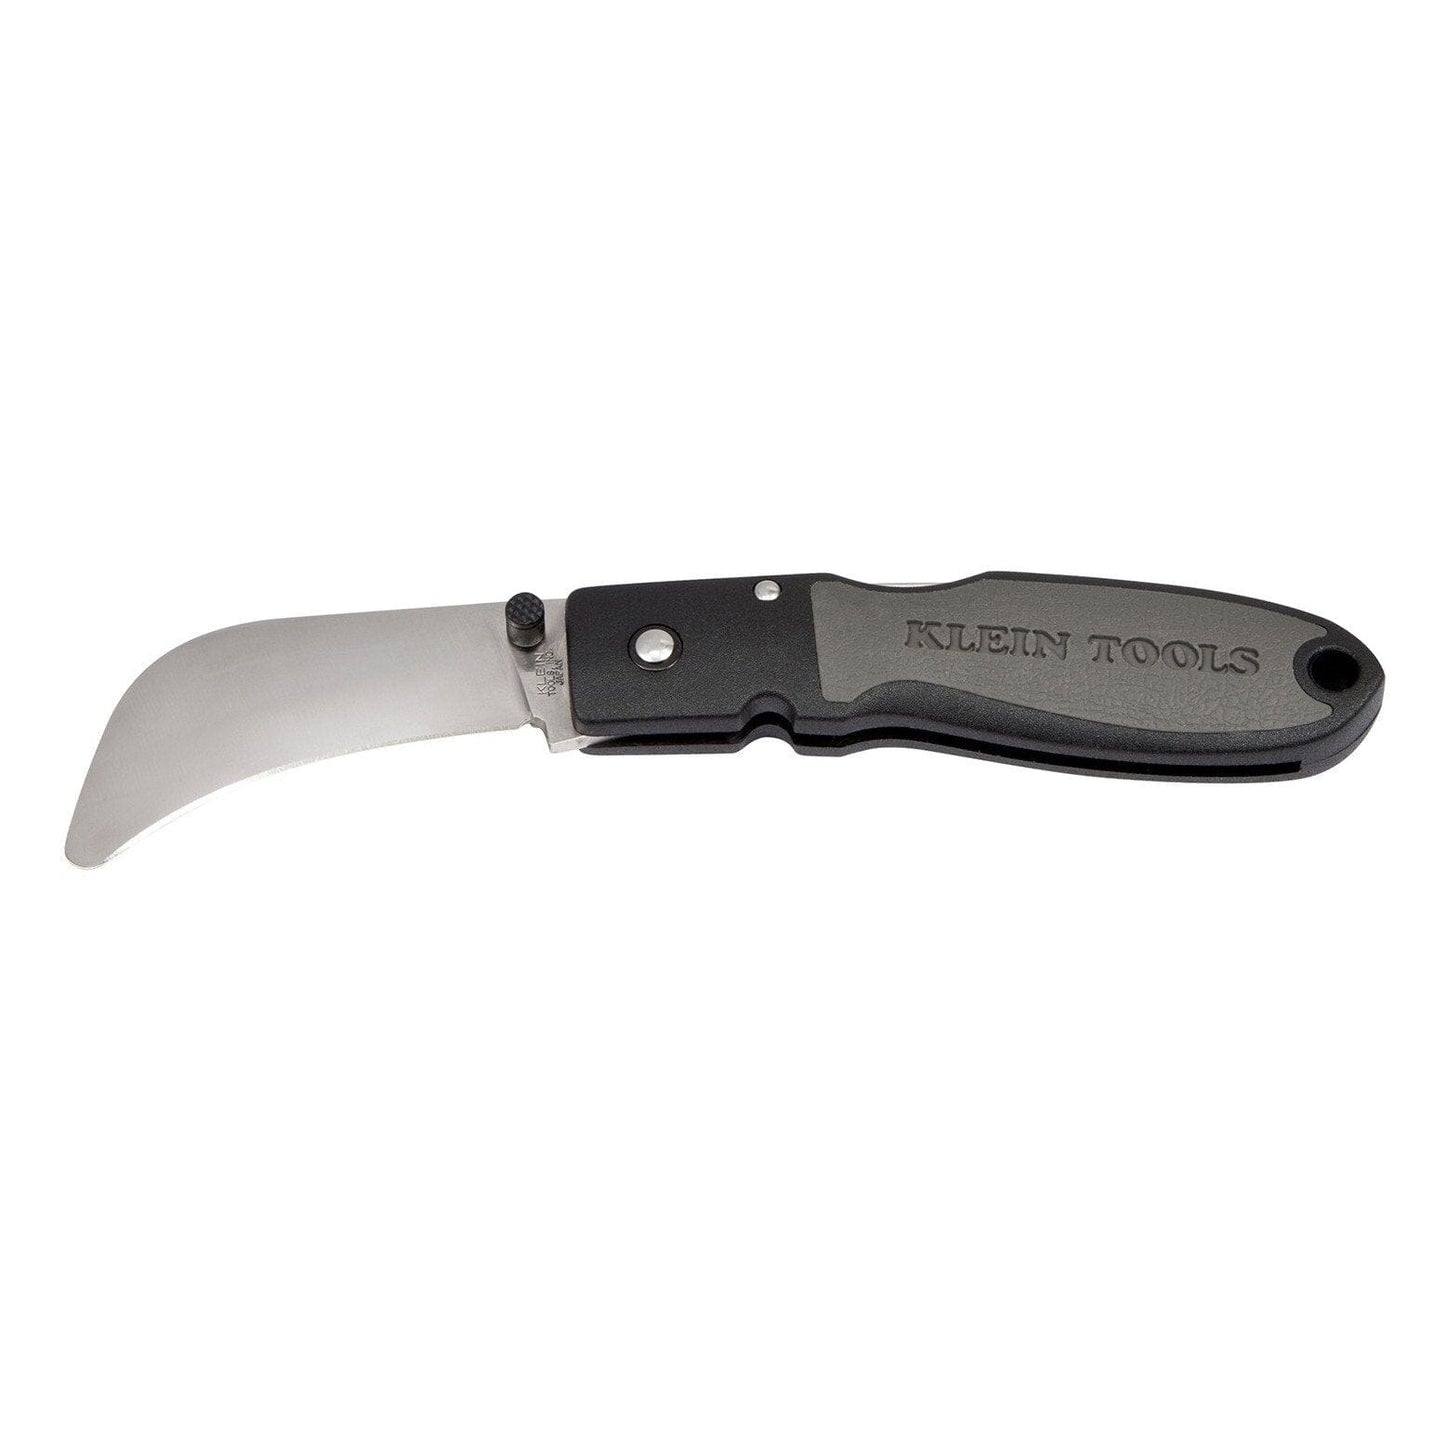 Klein Skinning Knife Lightweight Lockback Knife 2-5/8'' Sheepfoot Blade - Rounded Tip - 44005R Knives Klein Tools 